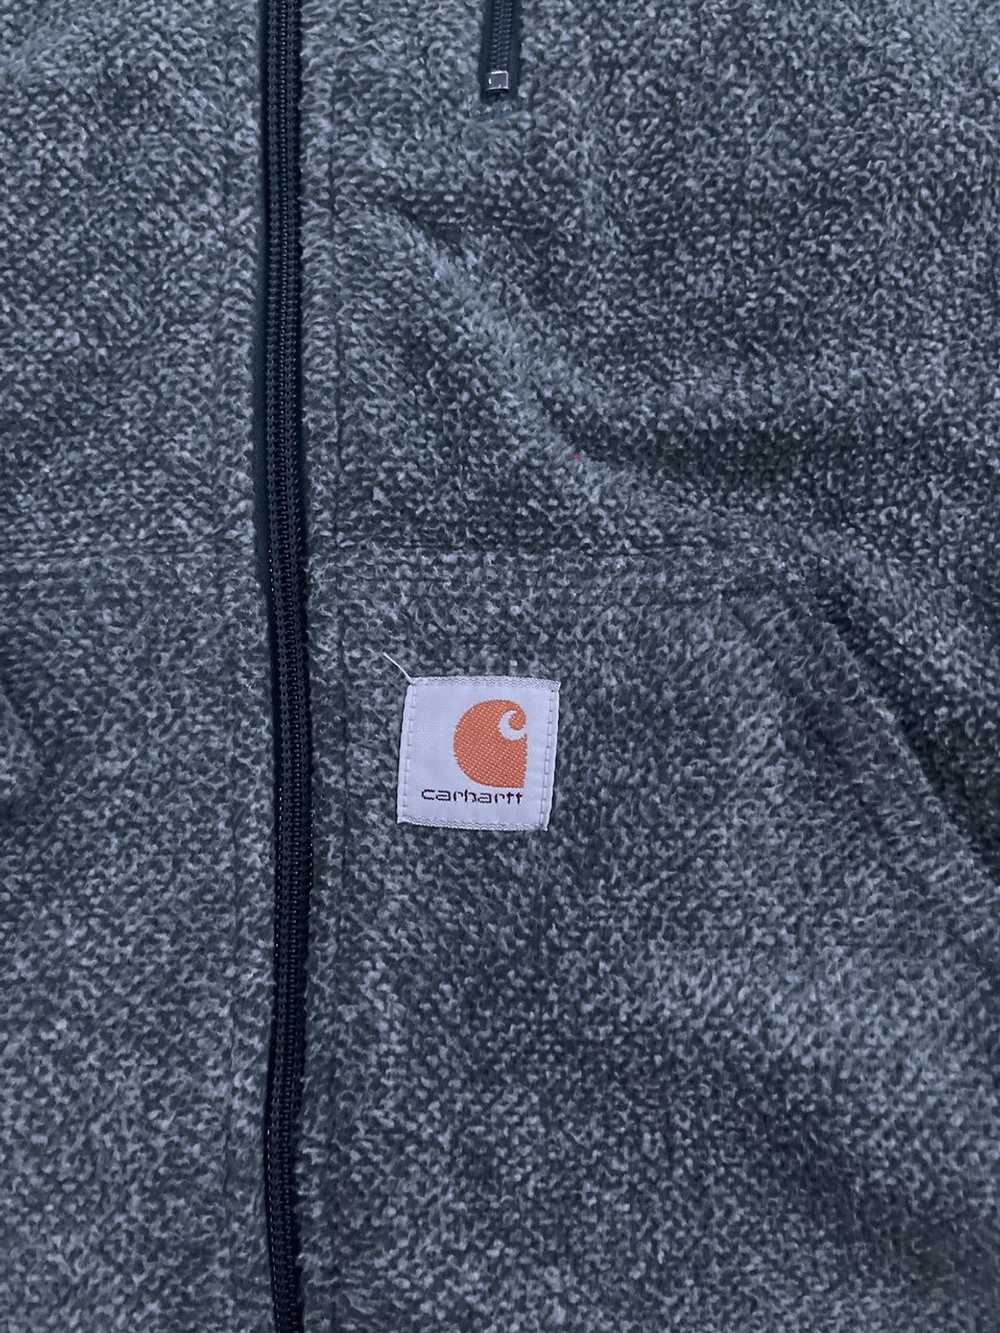 Carhartt Carhartt zip-up hooded jacket - image 4